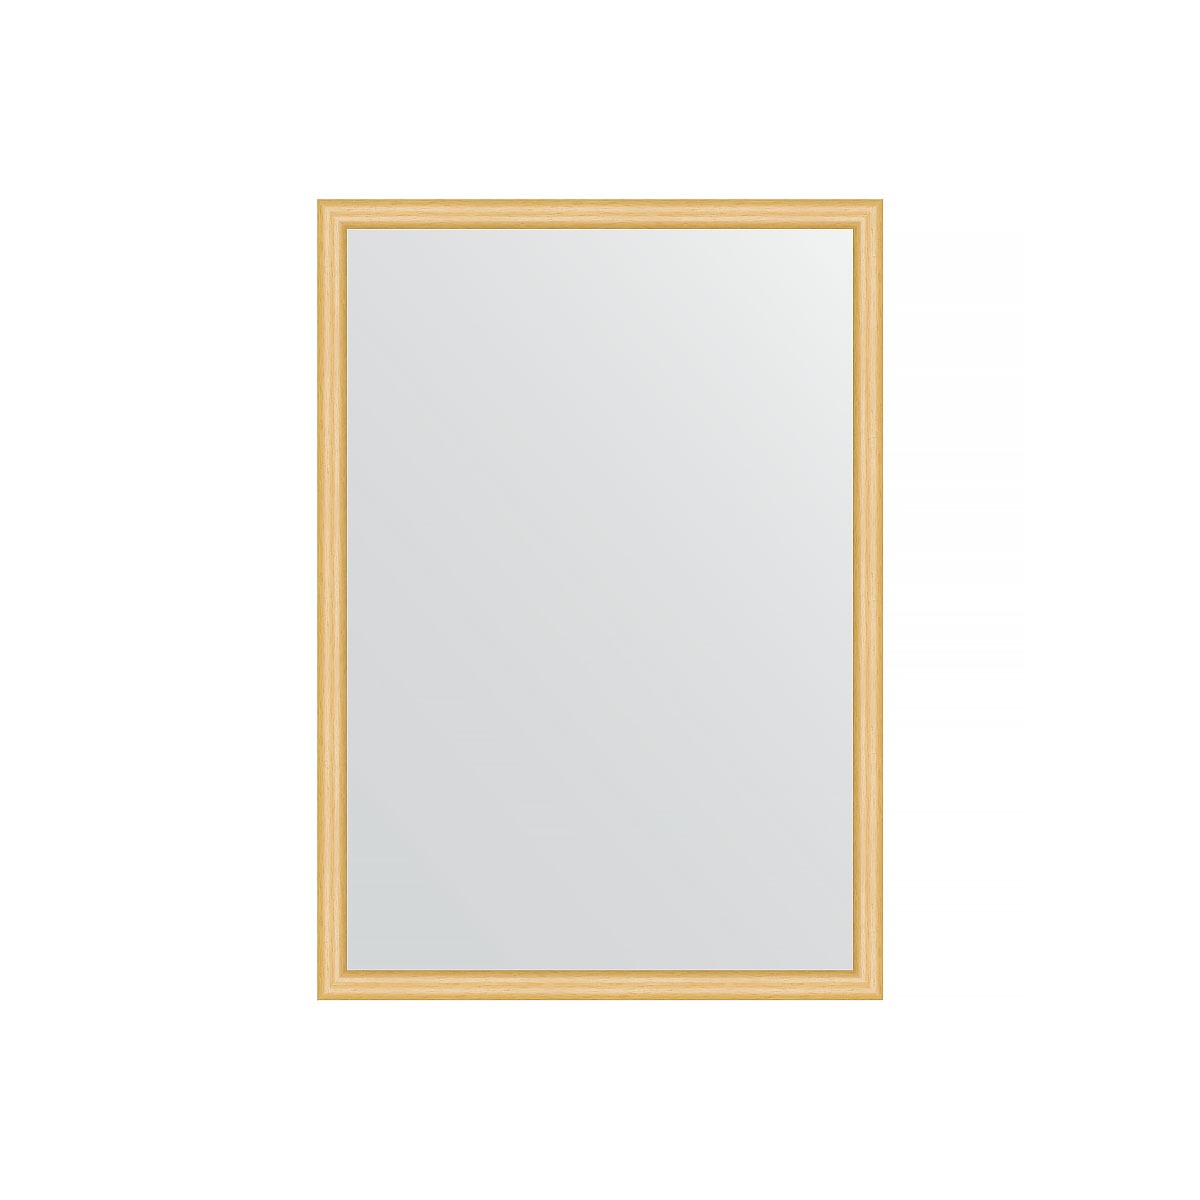 Зеркало в багетной раме Evoform сосна 22 мм 48х68 см зеркало 48х68 см махагон evoform definite by 0621